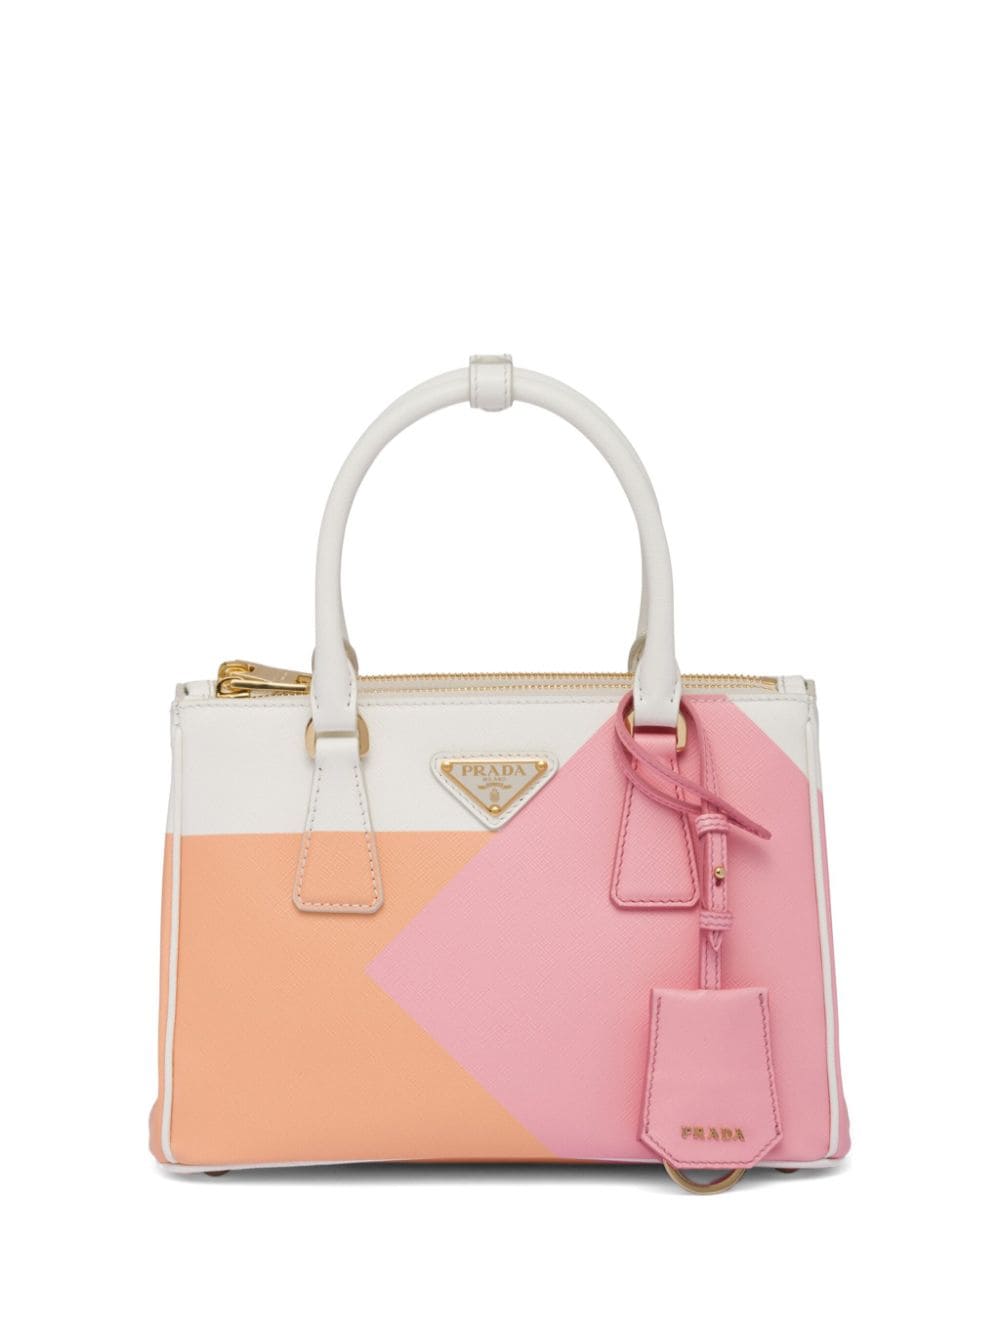 Prada Small Galleria Saffiano Leather Handbag In Pink